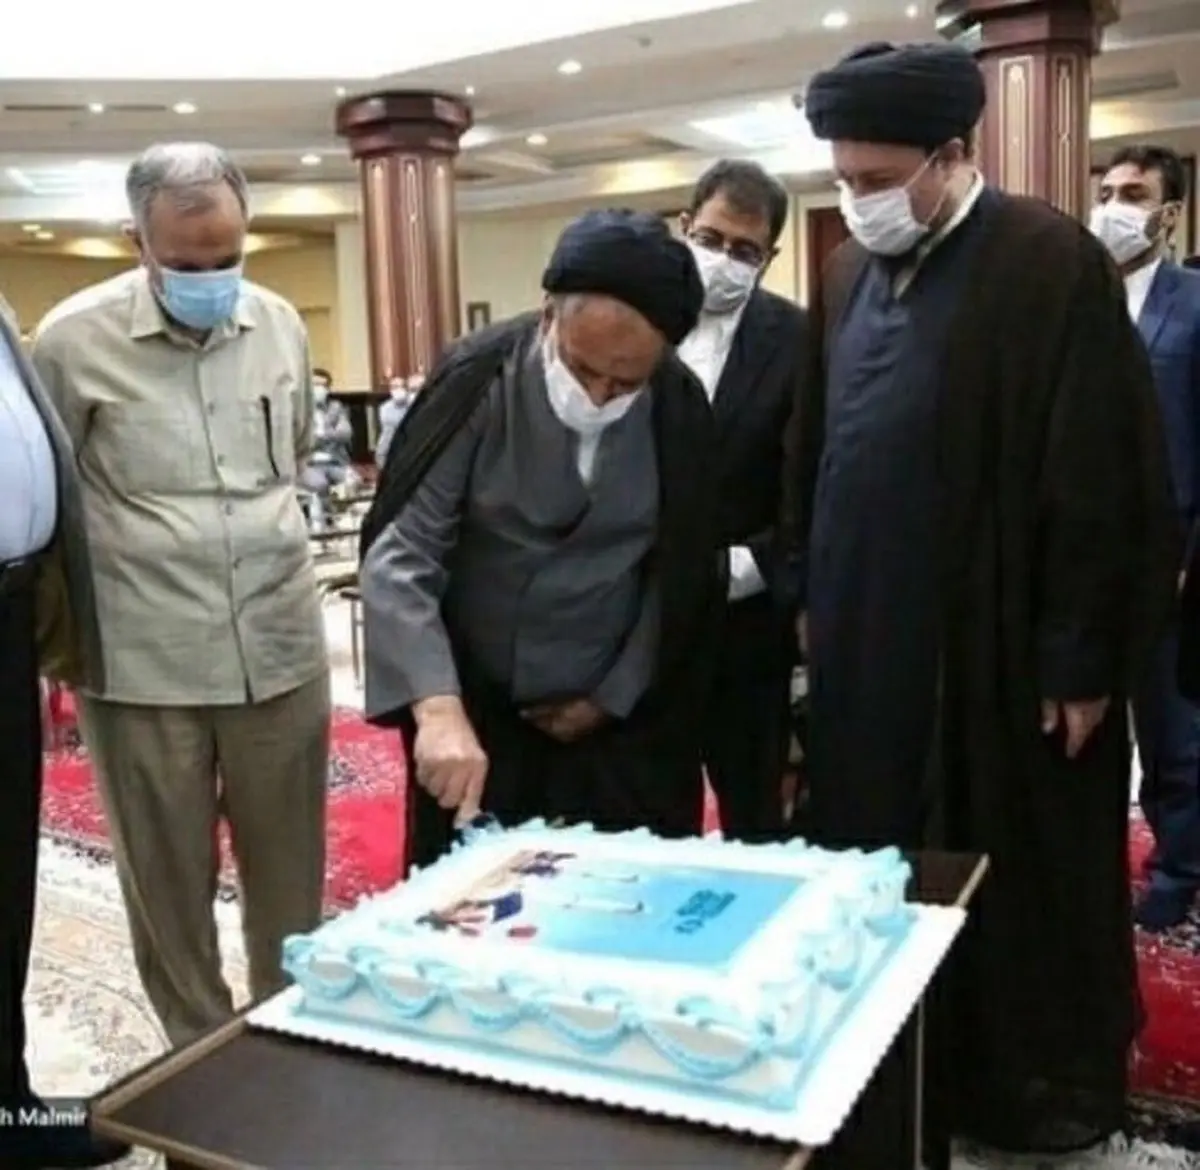  جشن ۵۰ سالگی قبرستان در تهران !